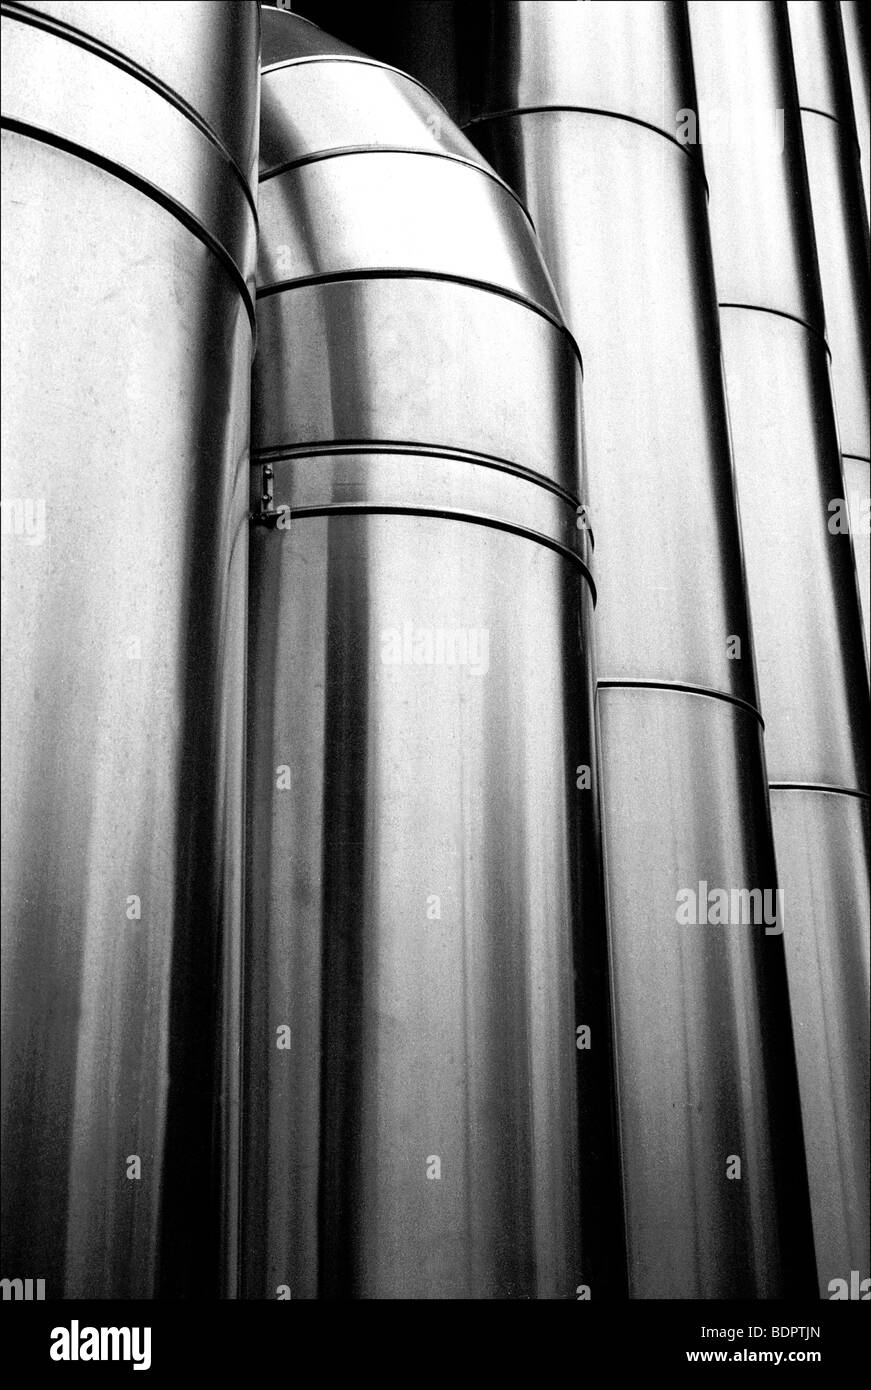 Aluminium pipes Stock Photo